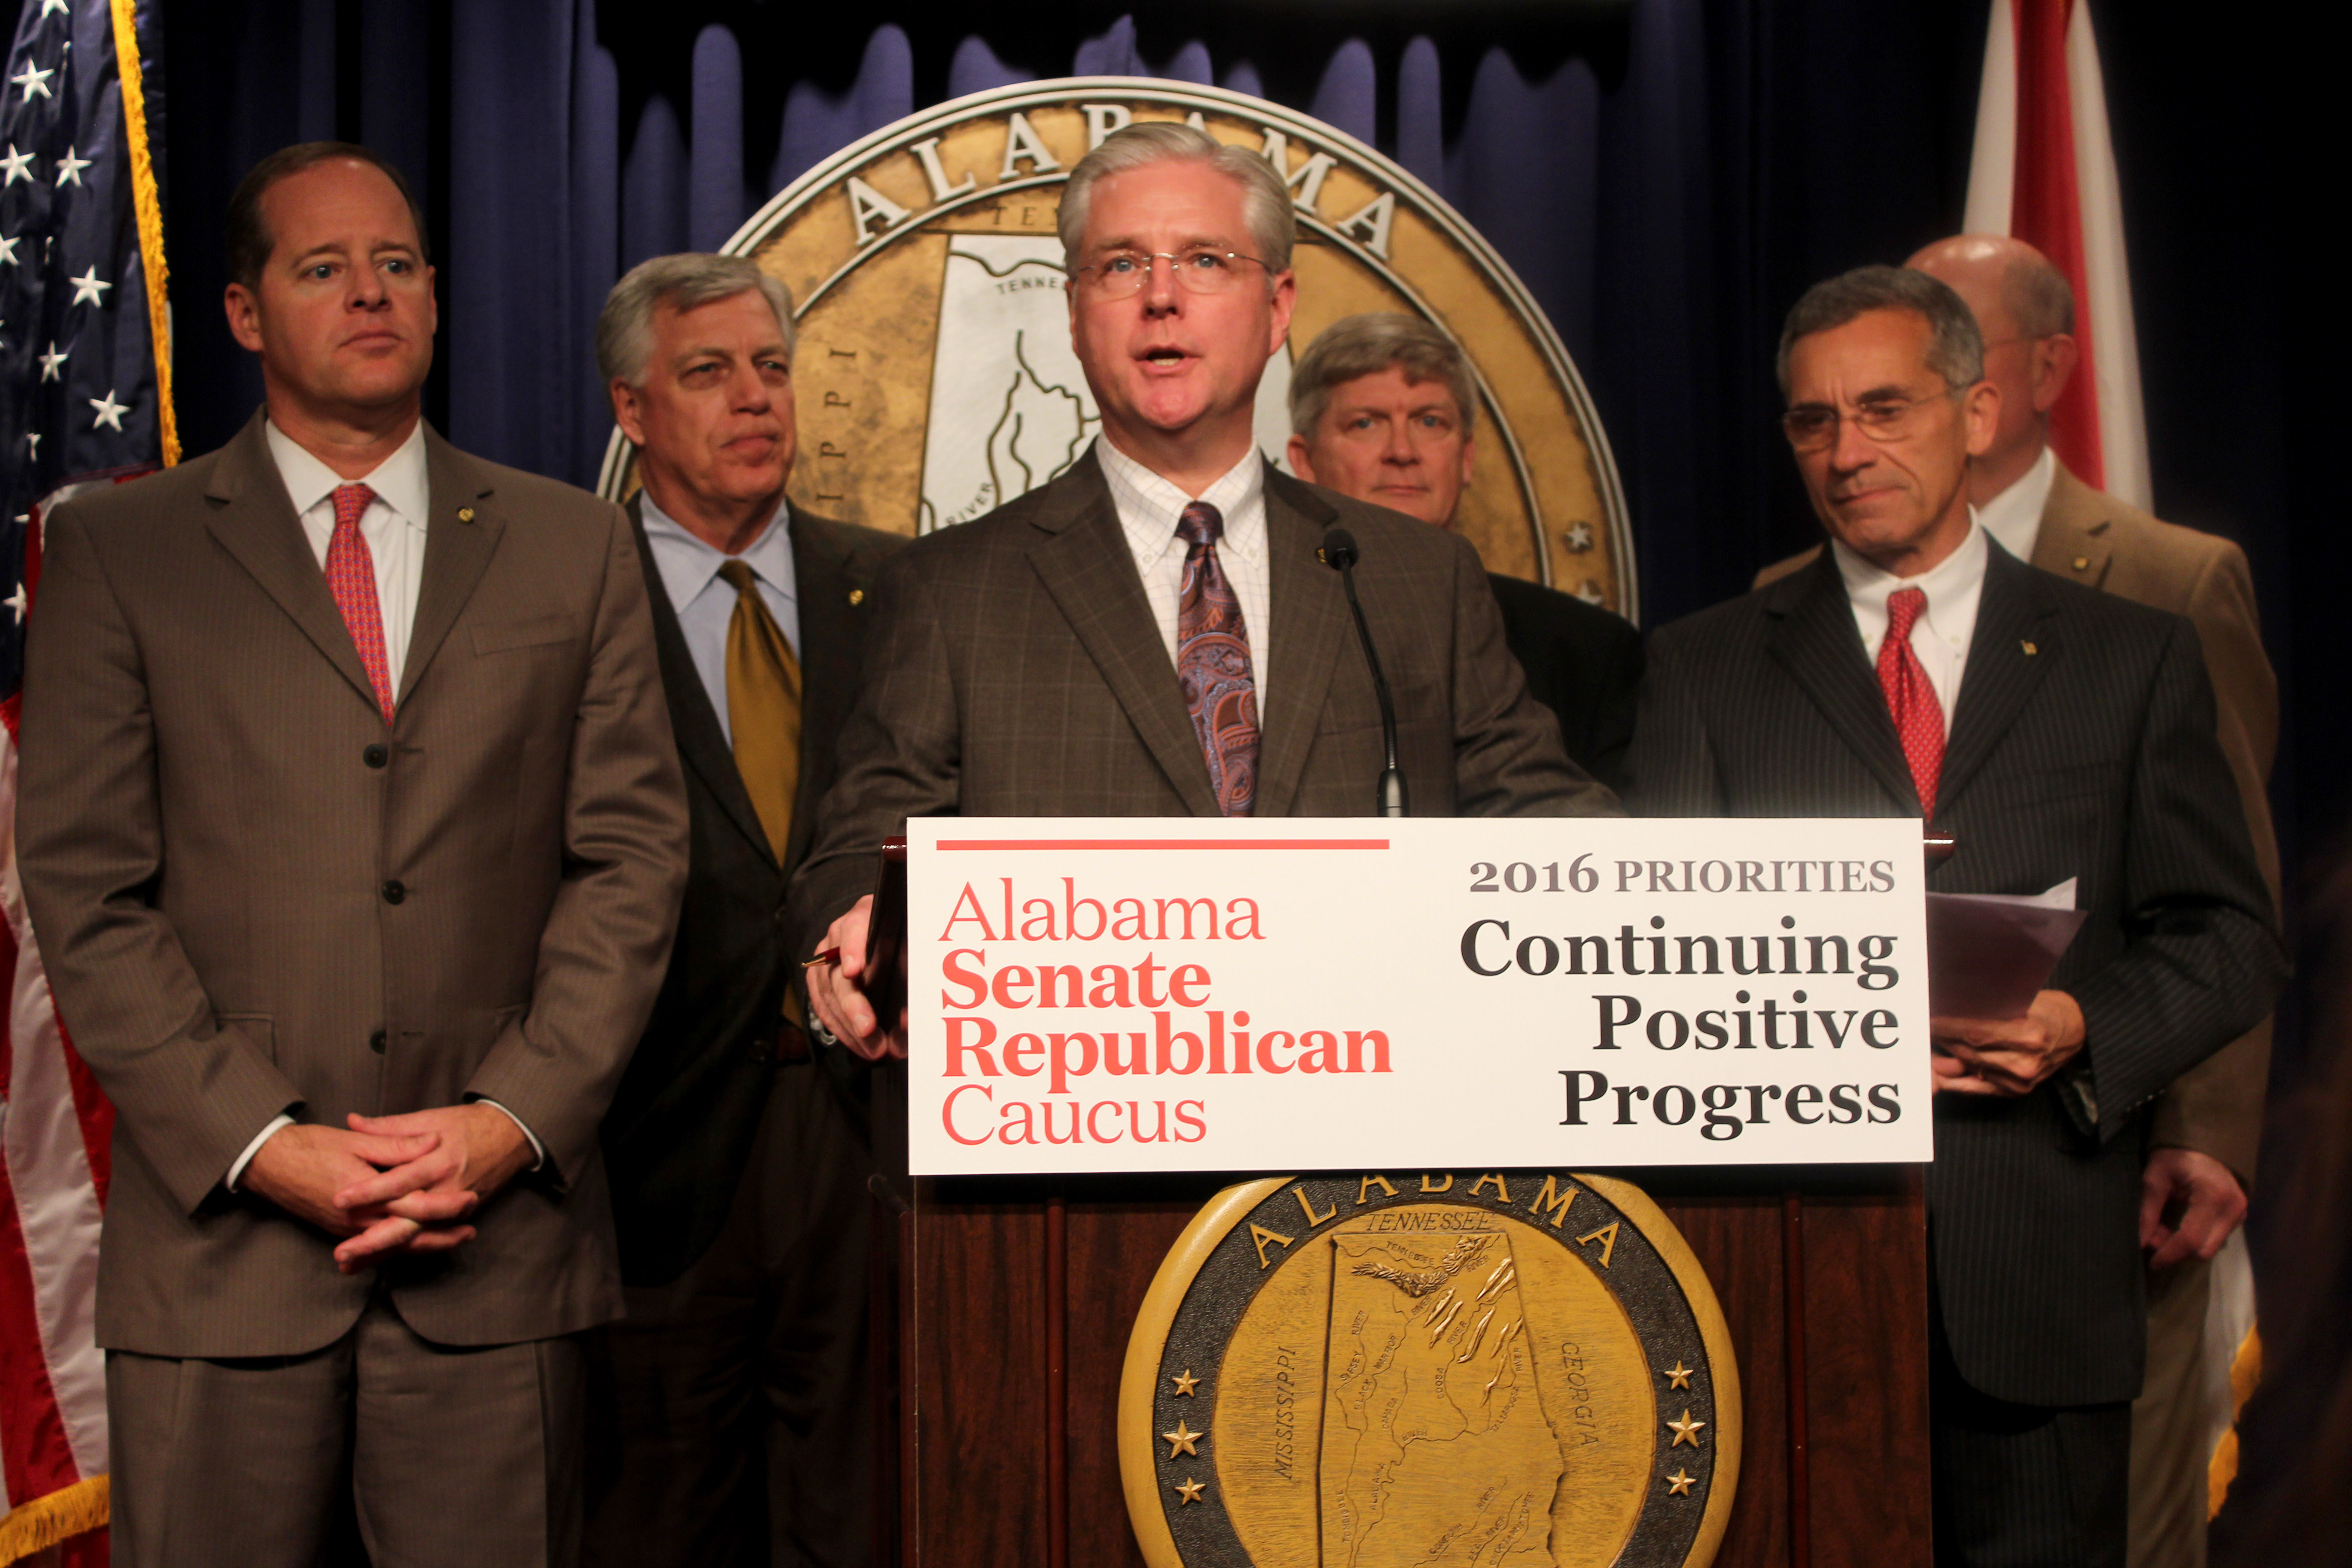 Alabama Senate Republicans name jobs, education and families among top